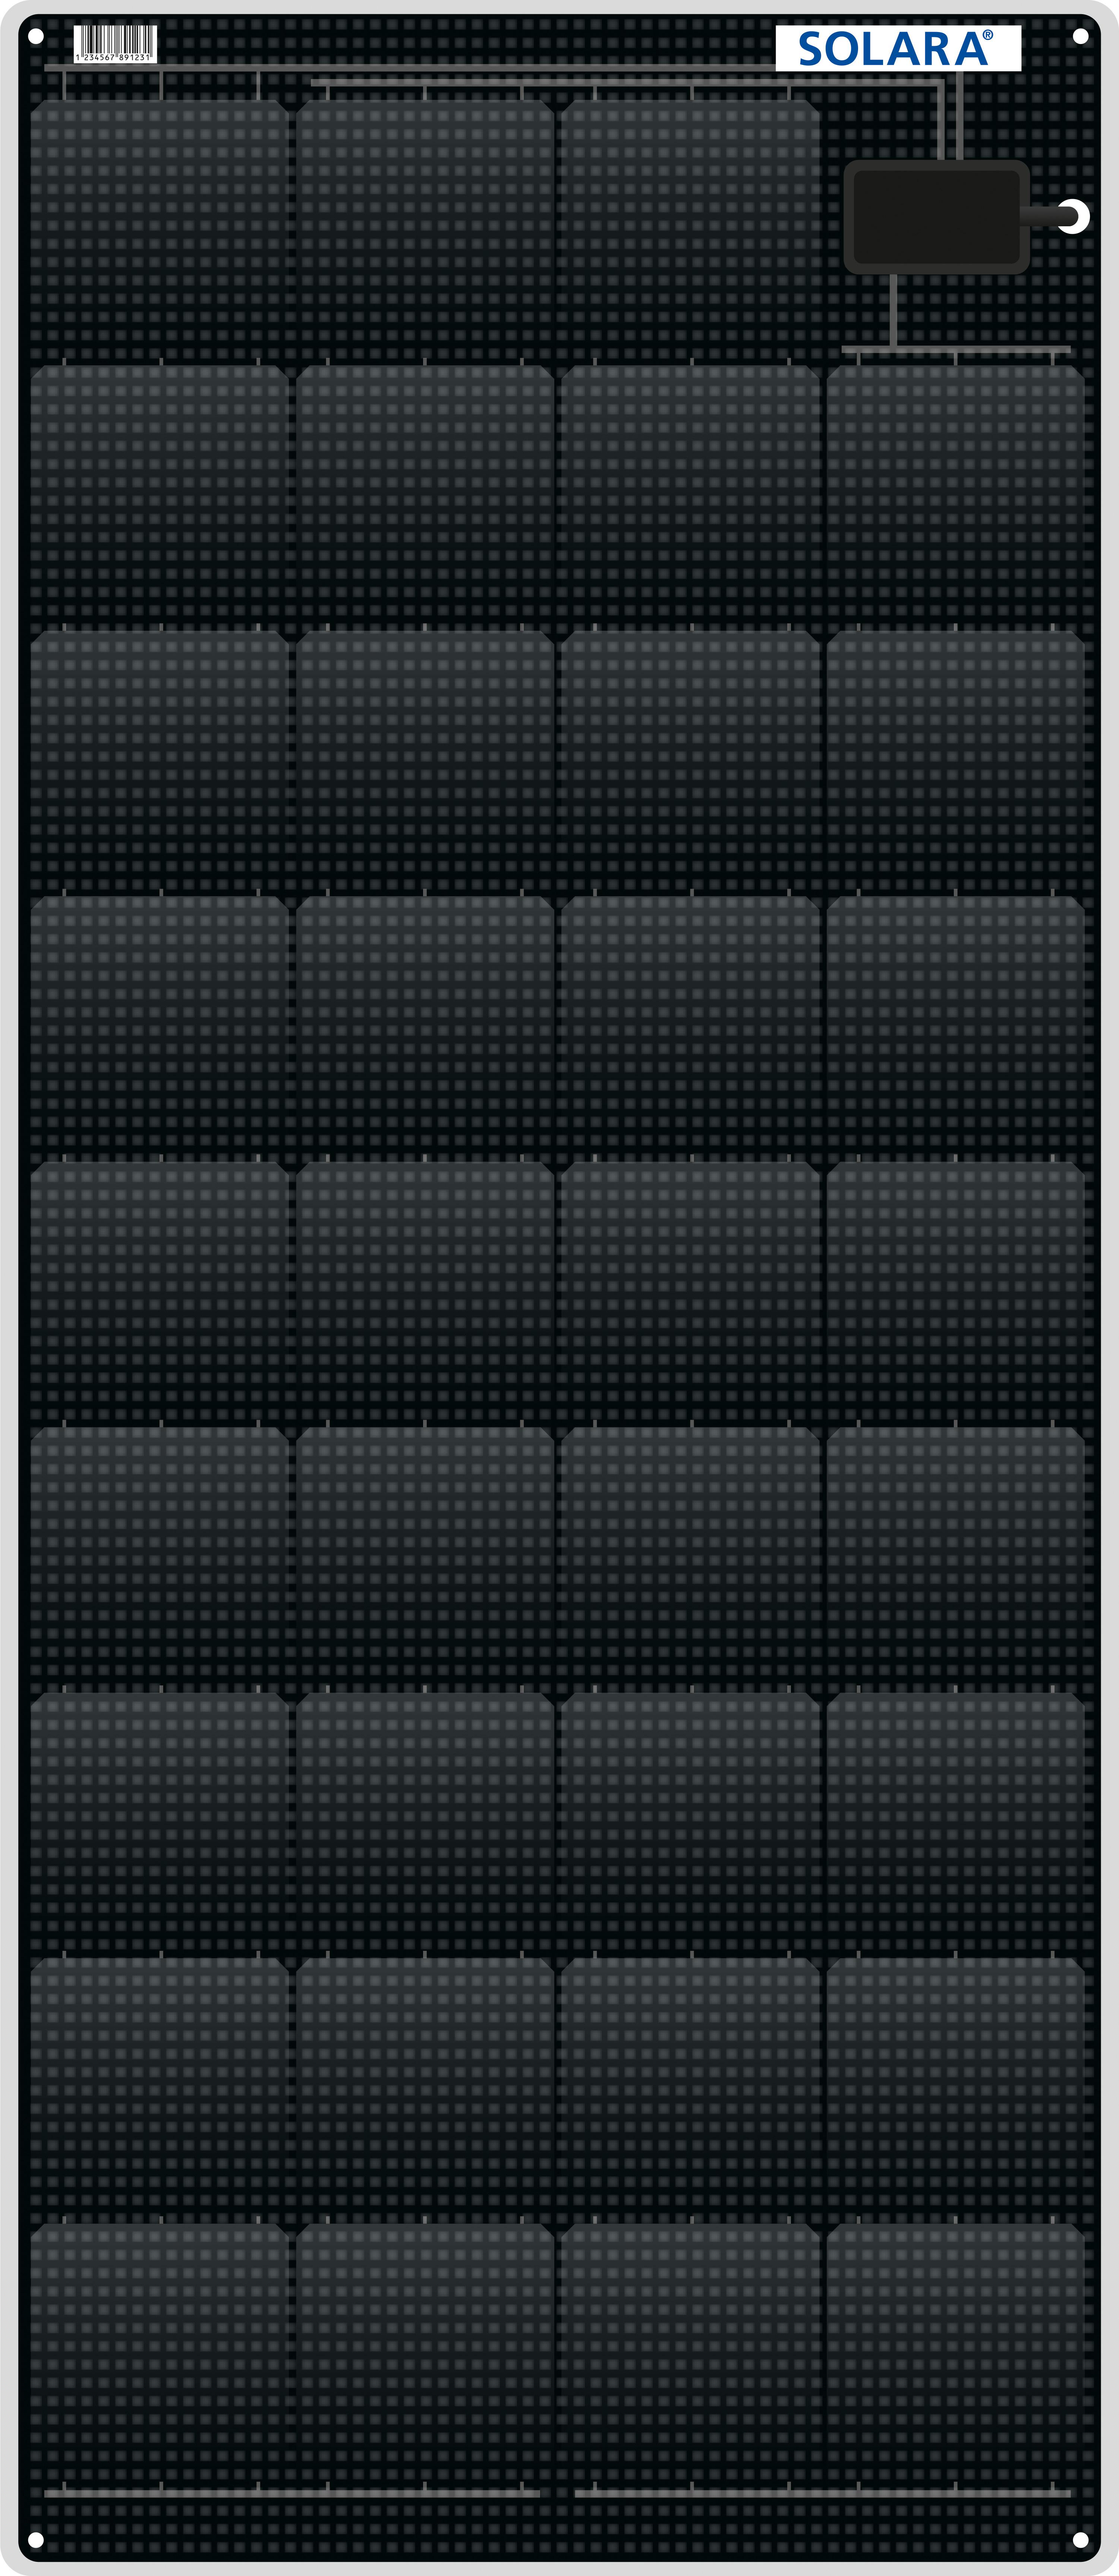 Solara Marine Solar Panel 120W Power Series (2019 Model)